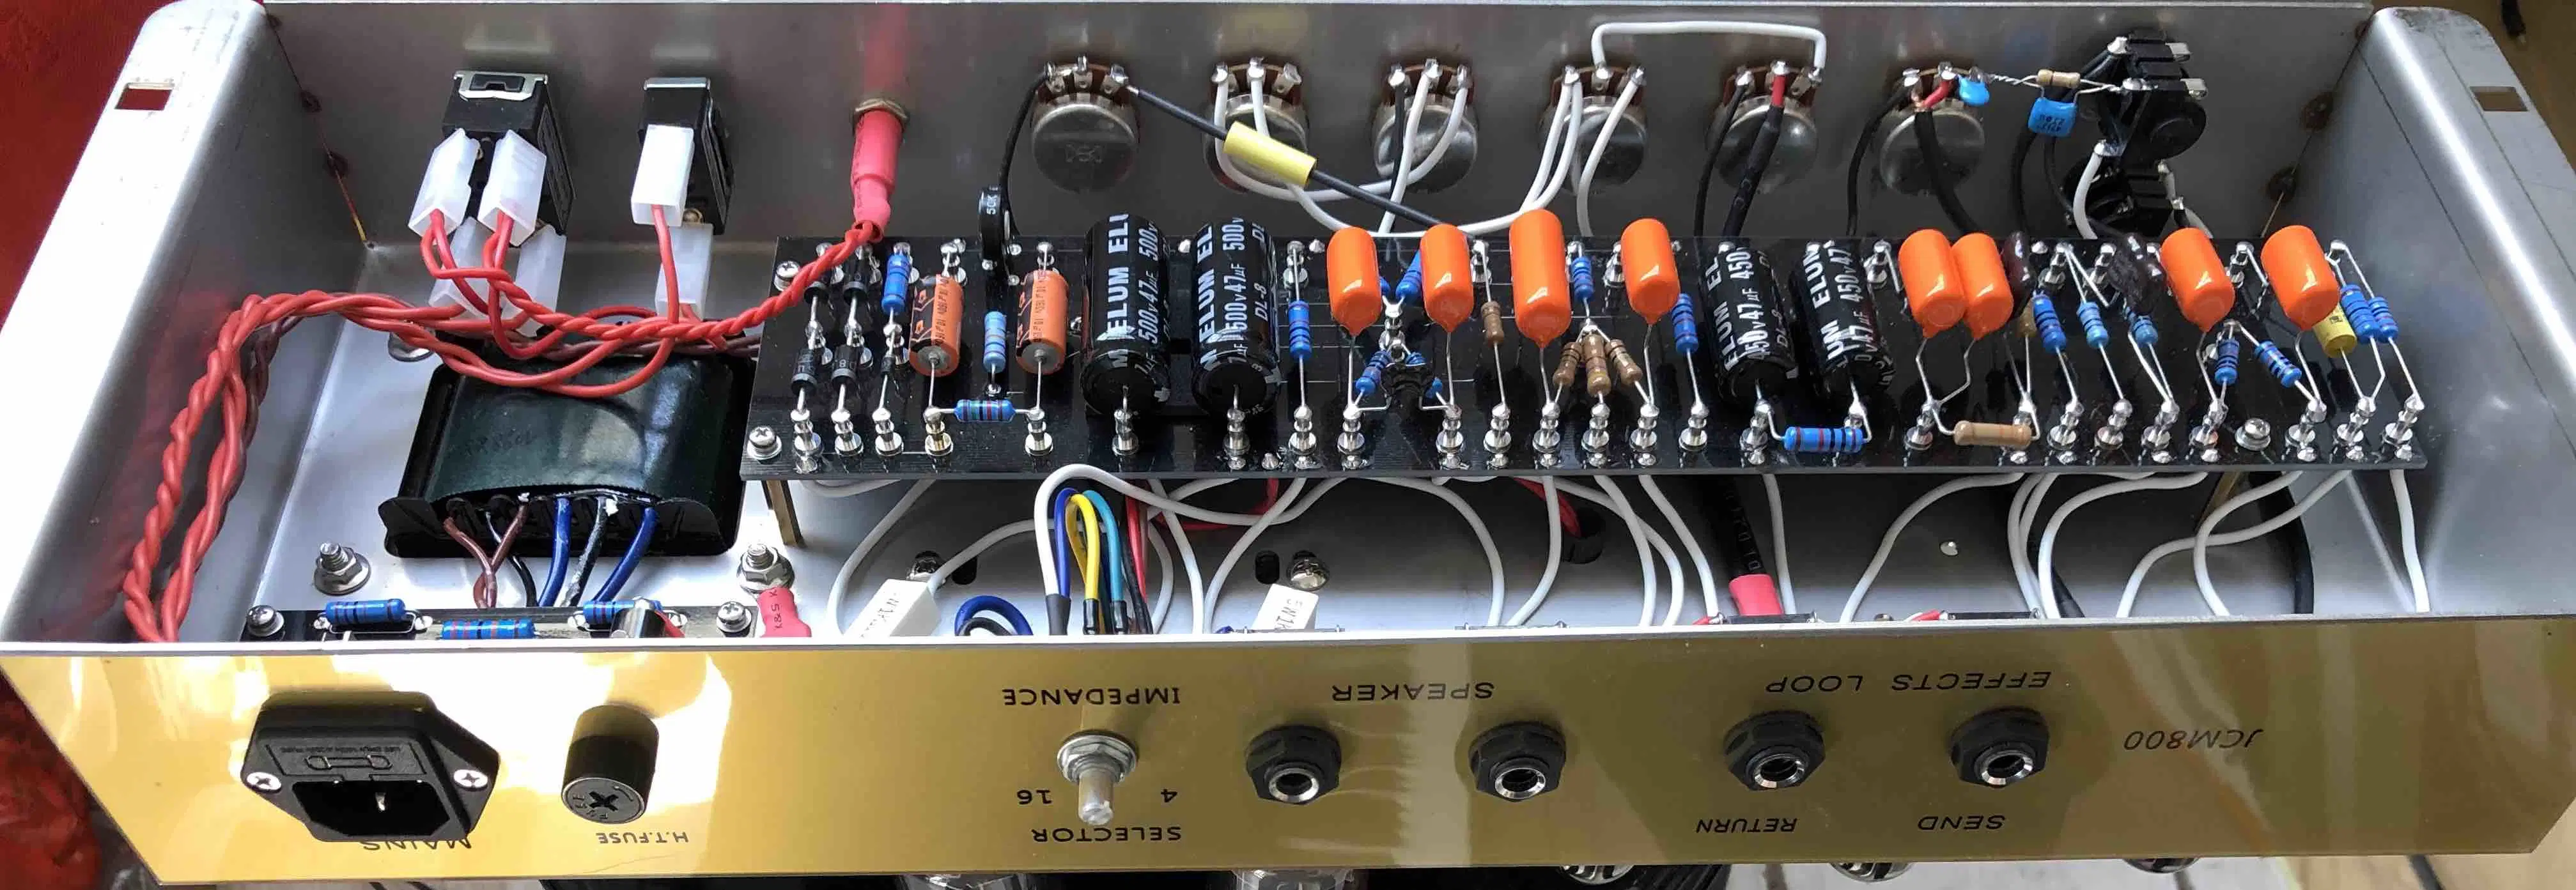 Custom Jcm Plexi 50W Electric Guitar Amplifier Head with Effect Loop Master